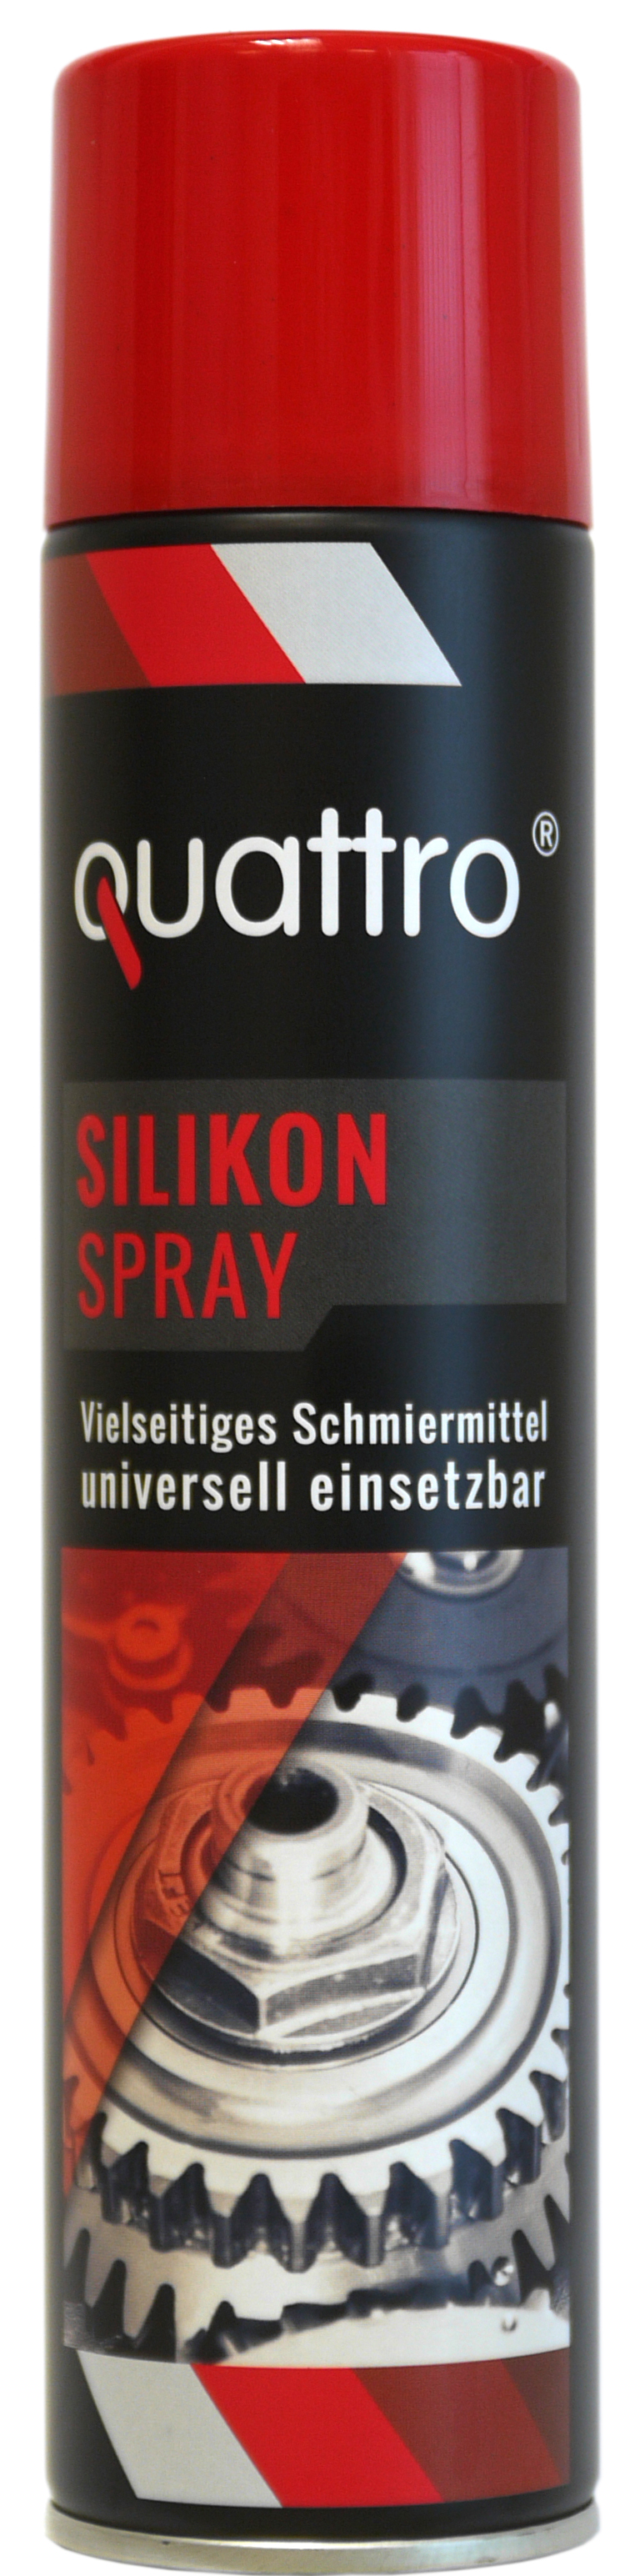 00721 - silicone spray 300 ml